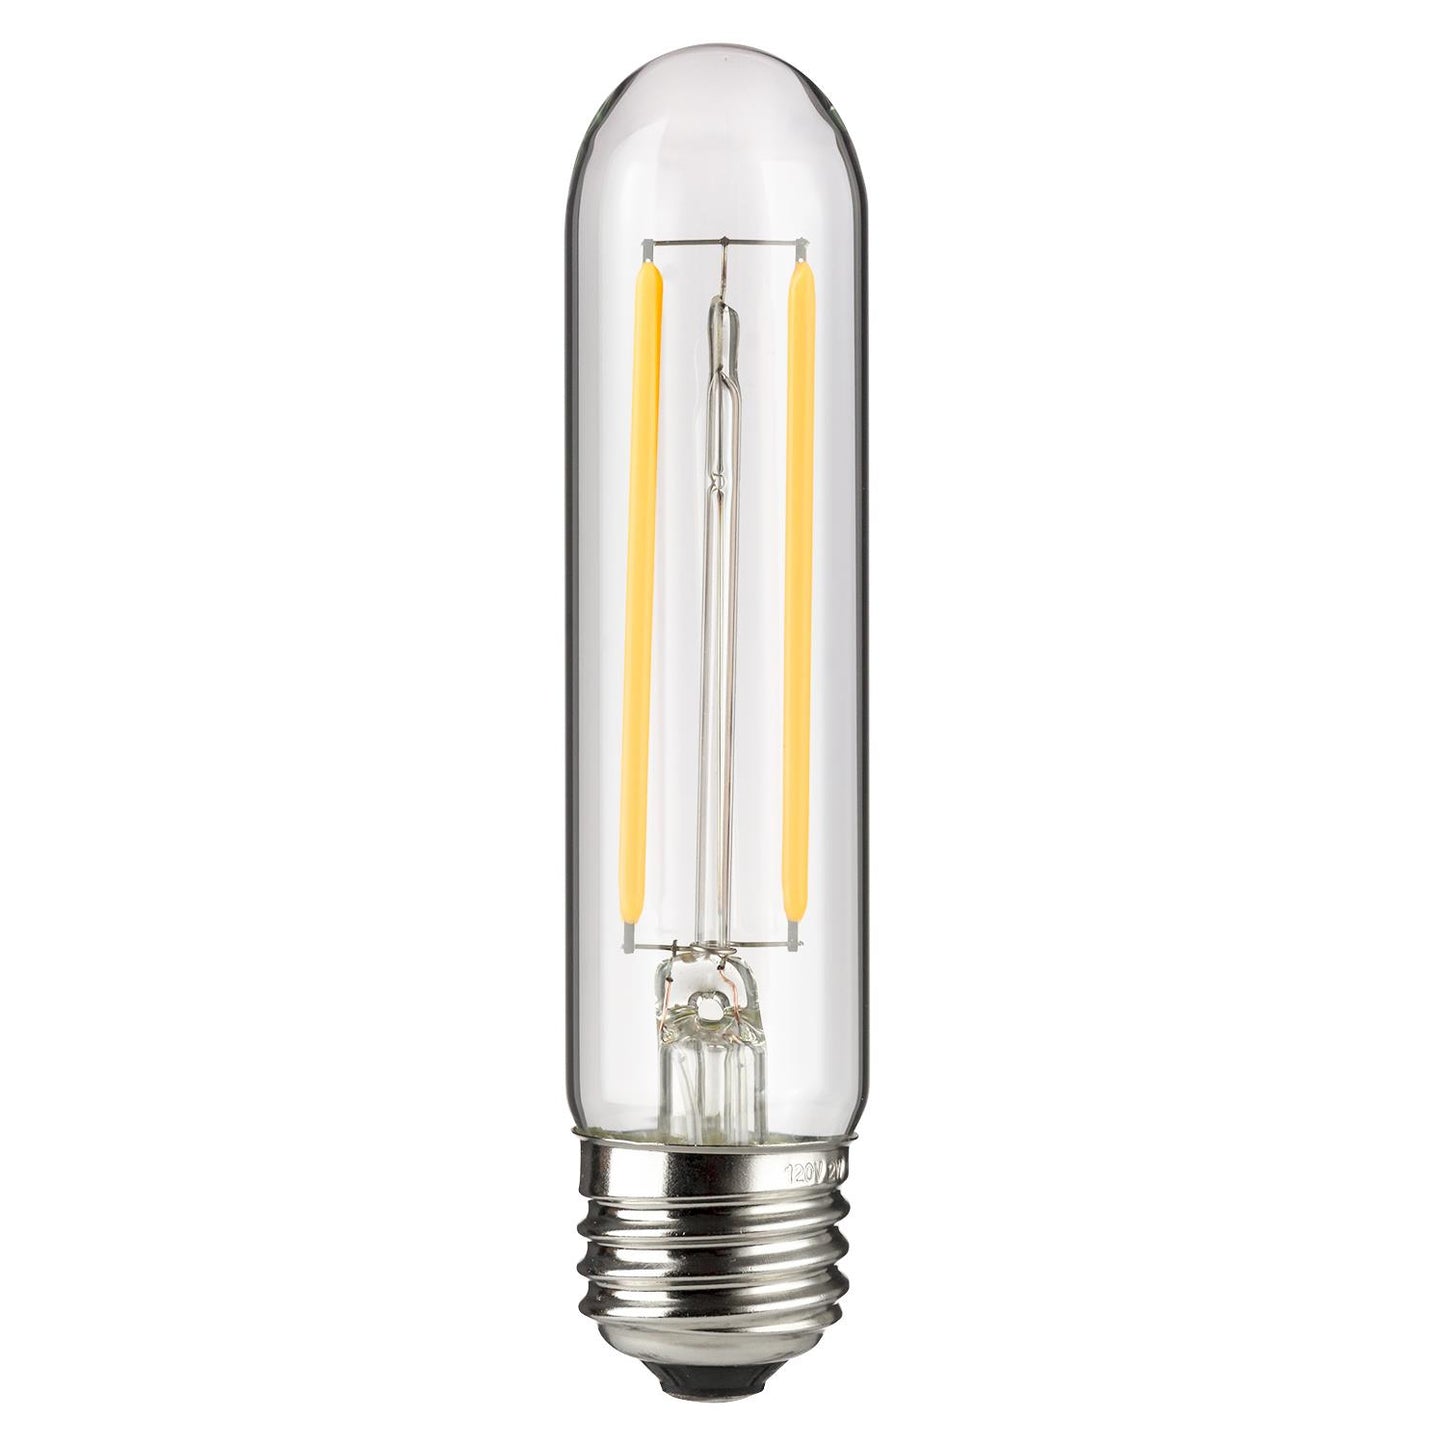 Sunlite LED Filament T10 Tubular Light Bulb, 2 Watts (25W Equivalent), 160 Lumens, Medium E26 Base, 120 Volts, Dimmable, 90 CRI, UL Listed, Clear, 4000K Cool White, 10 Pack